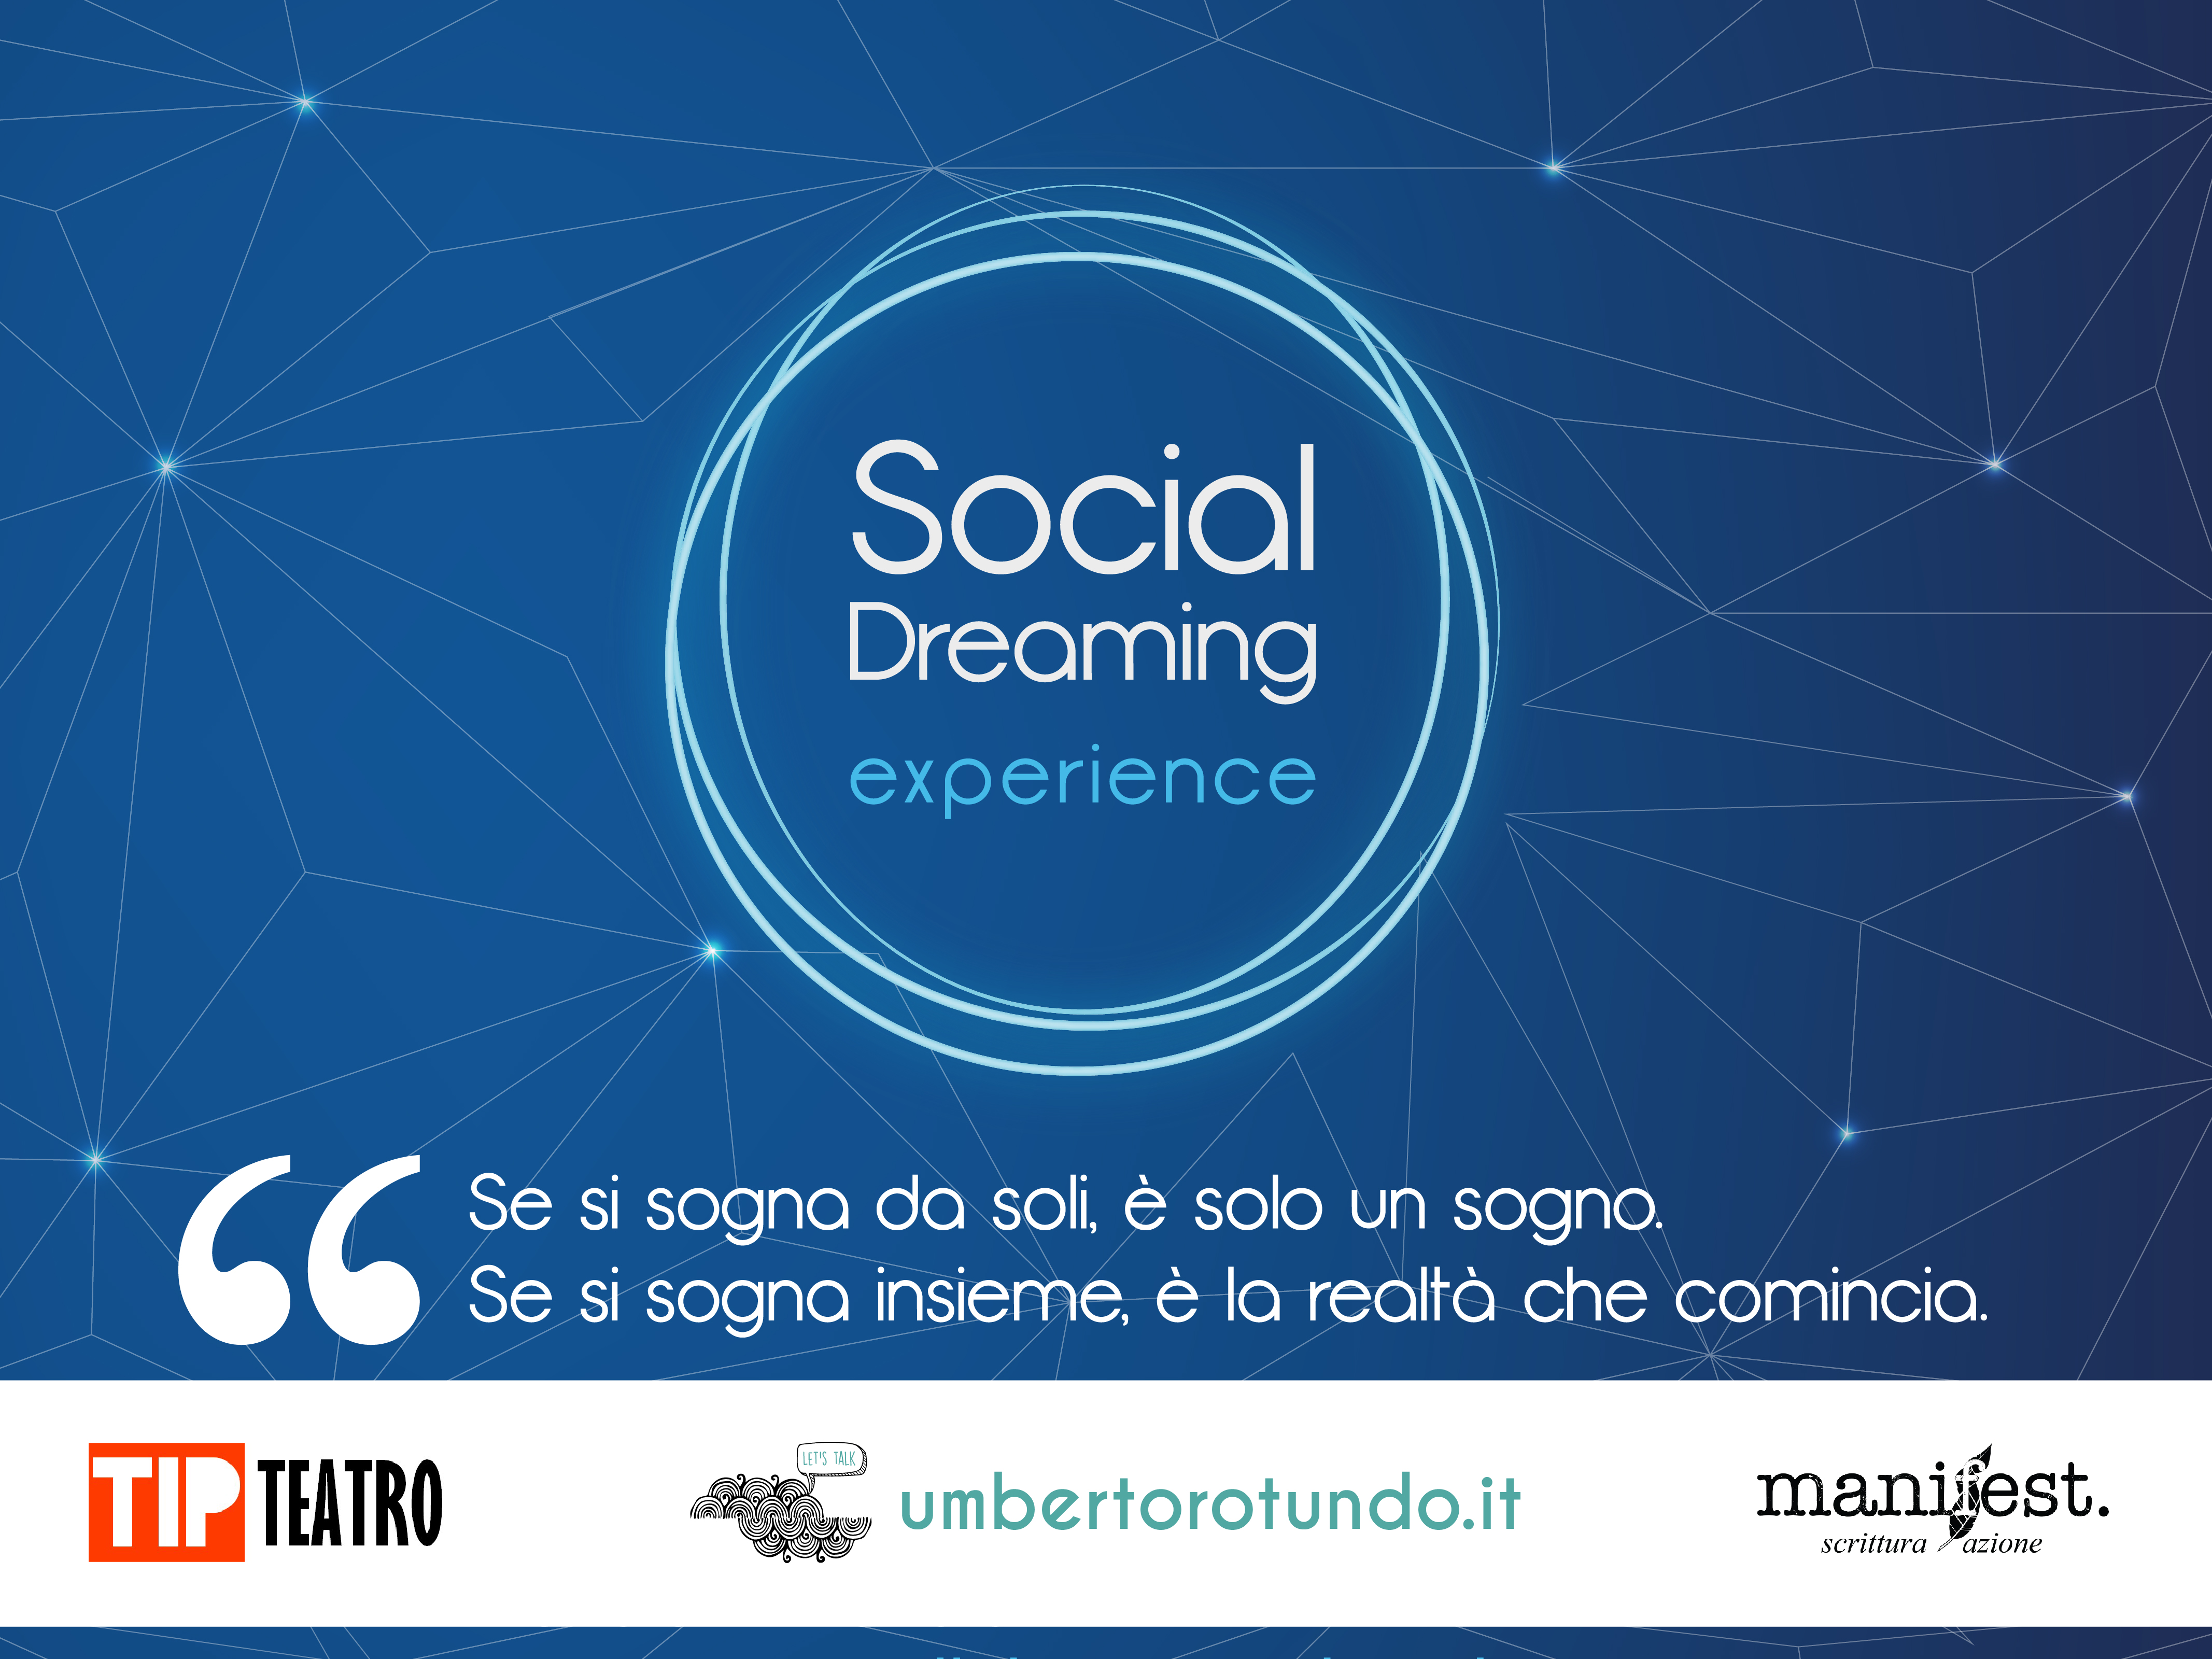 Il 27 ottobre primo social dreaming experience al TIP Teatro Lamezia Terme